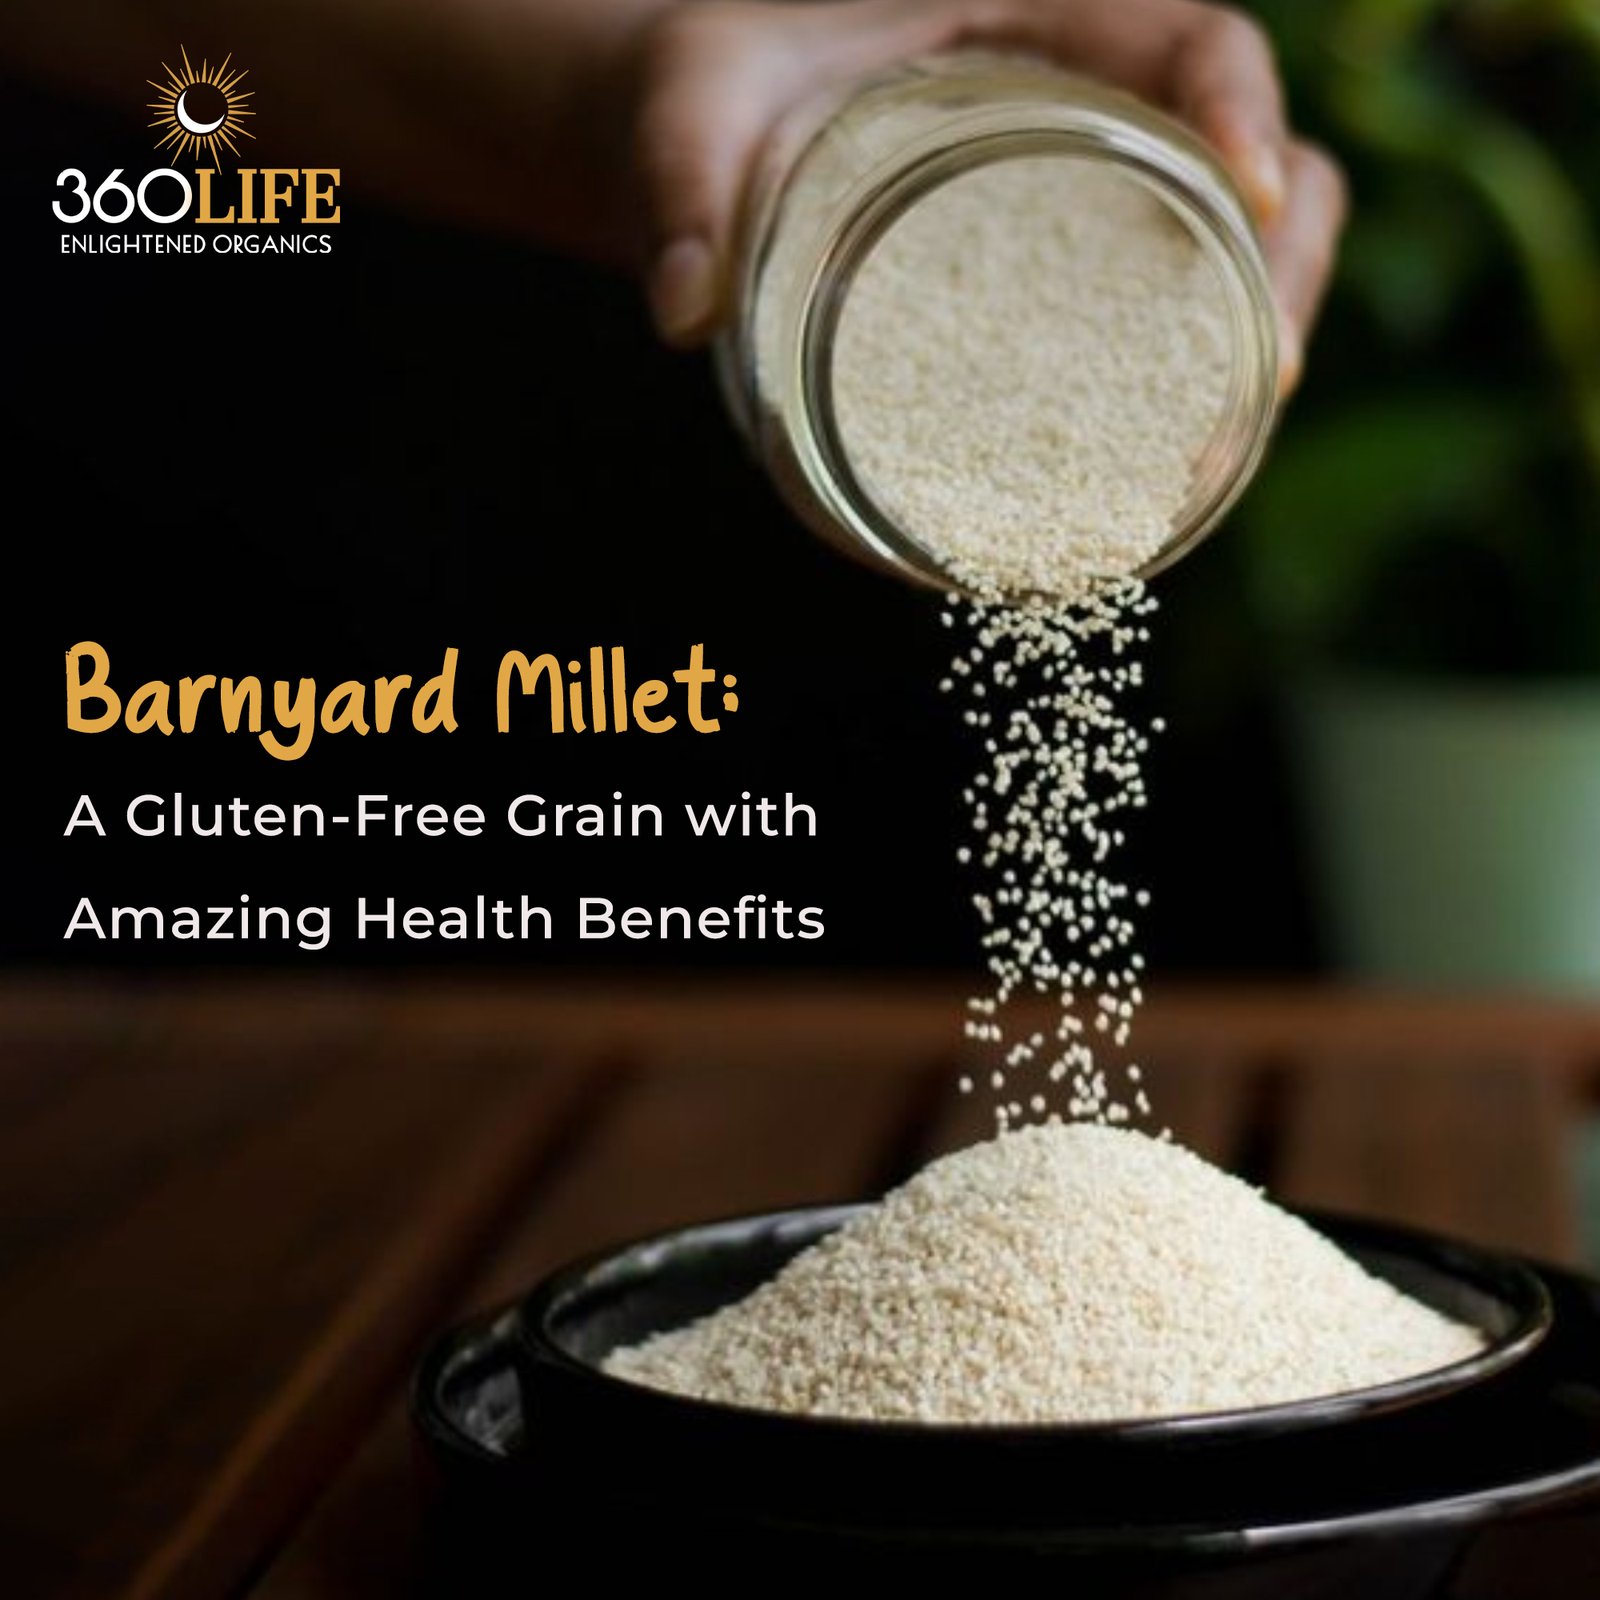 Barnyard Millet: A Gluten-Free Grain with Amazing Health Benefits